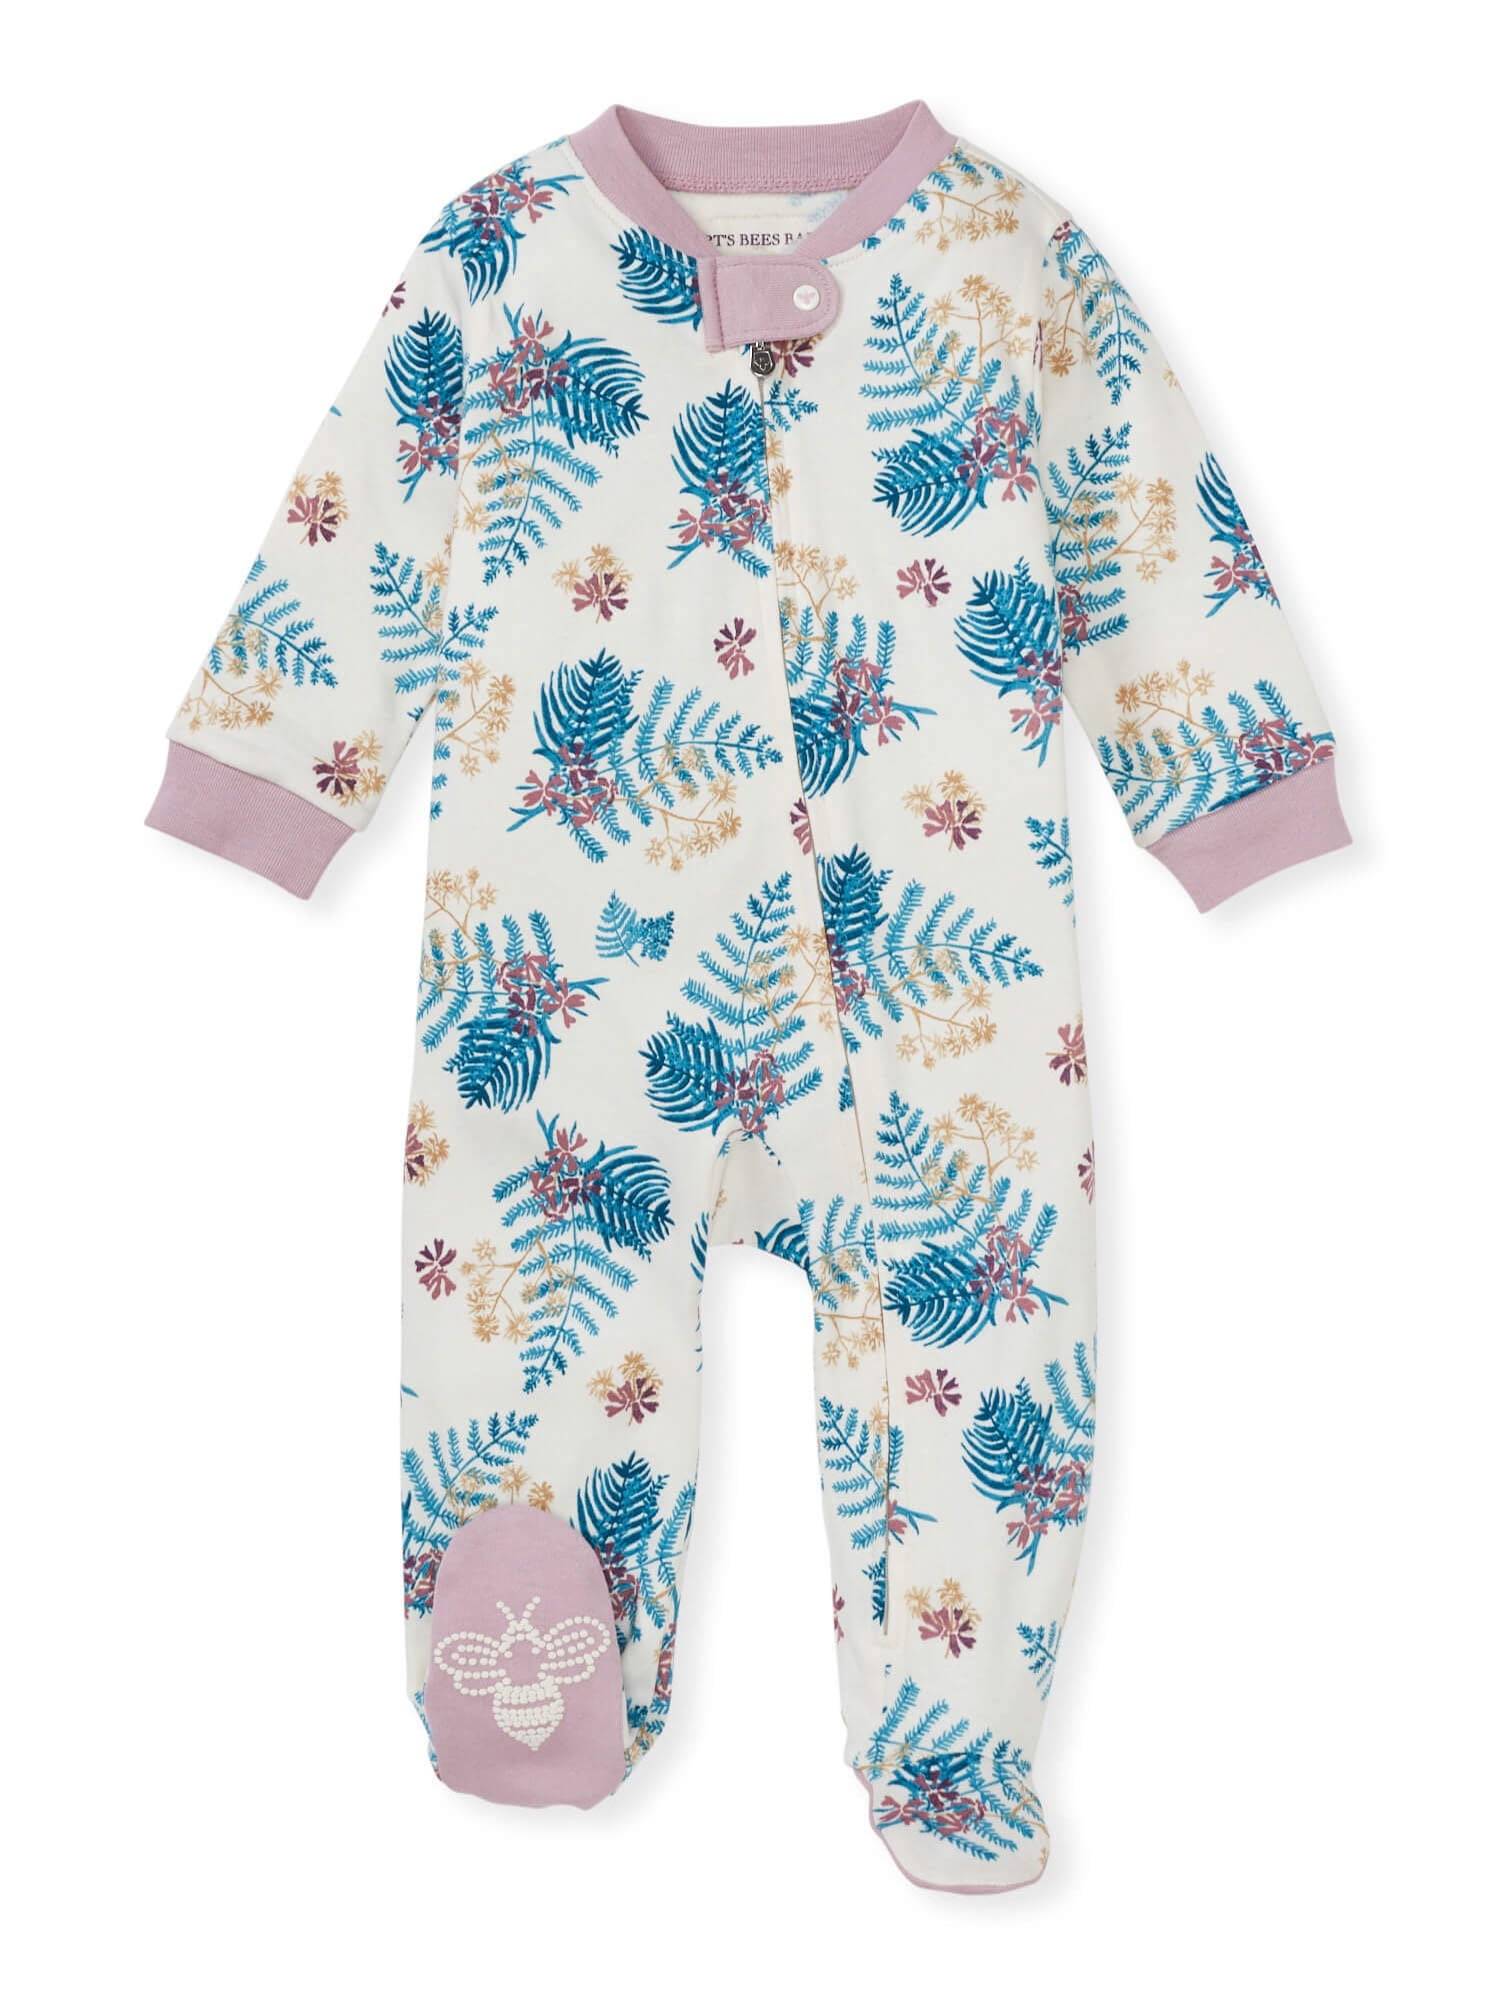 Organic One-Piece Romper-Jumpsuit Pj Zip Front Footed Pajama Burts Bees Baby Baby Sleep & Play Heartbeat Newborn 